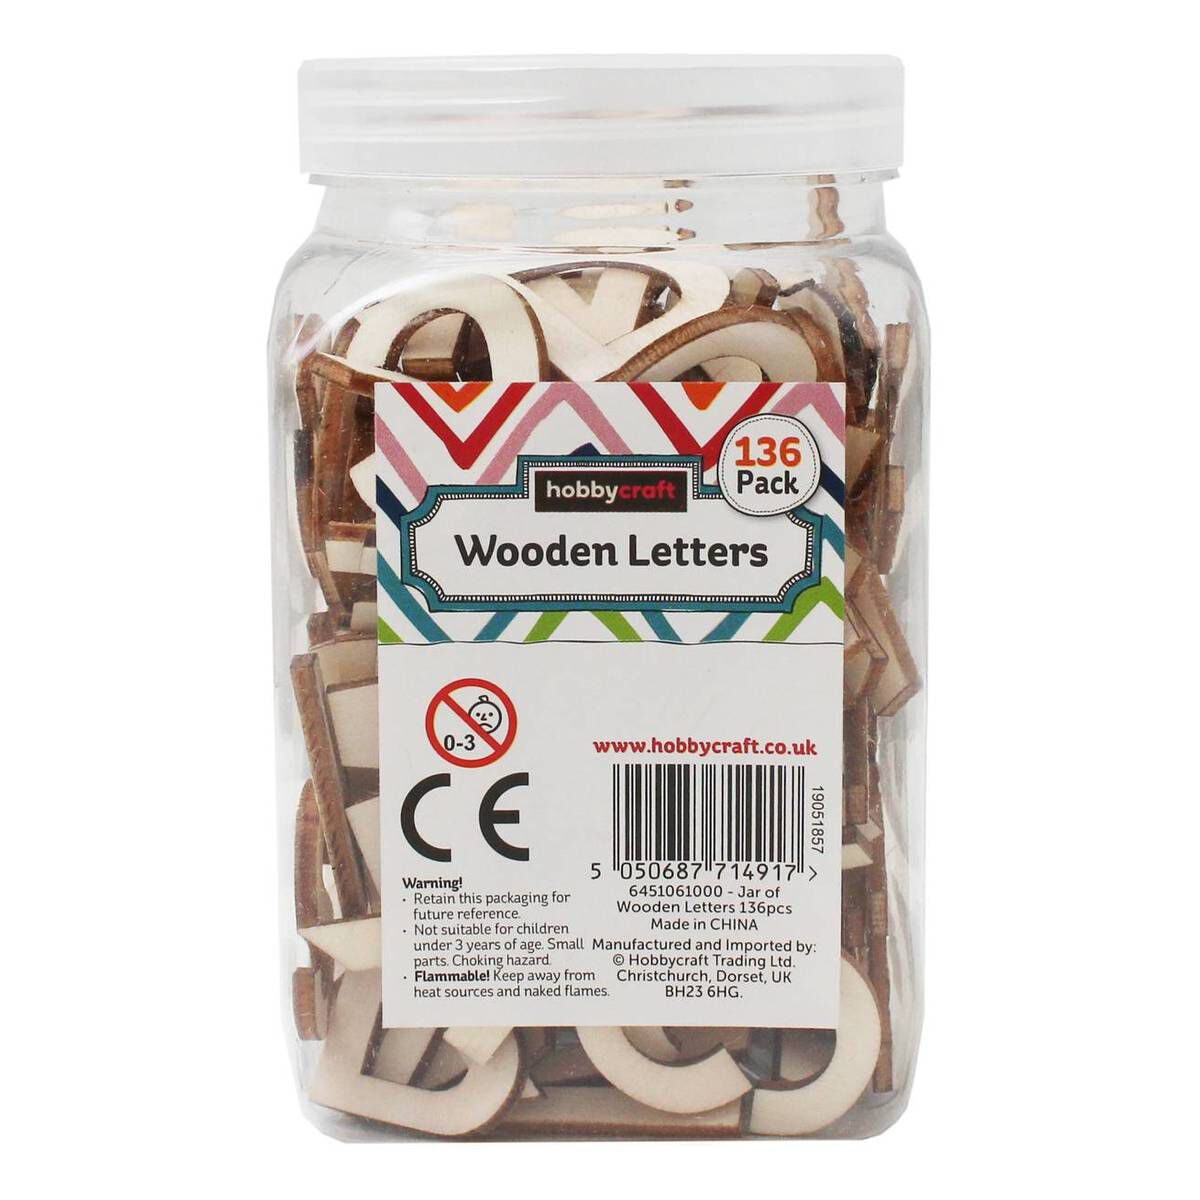 645106 1000 2  Wooden Letters Pack 136 Pieces ?q=80